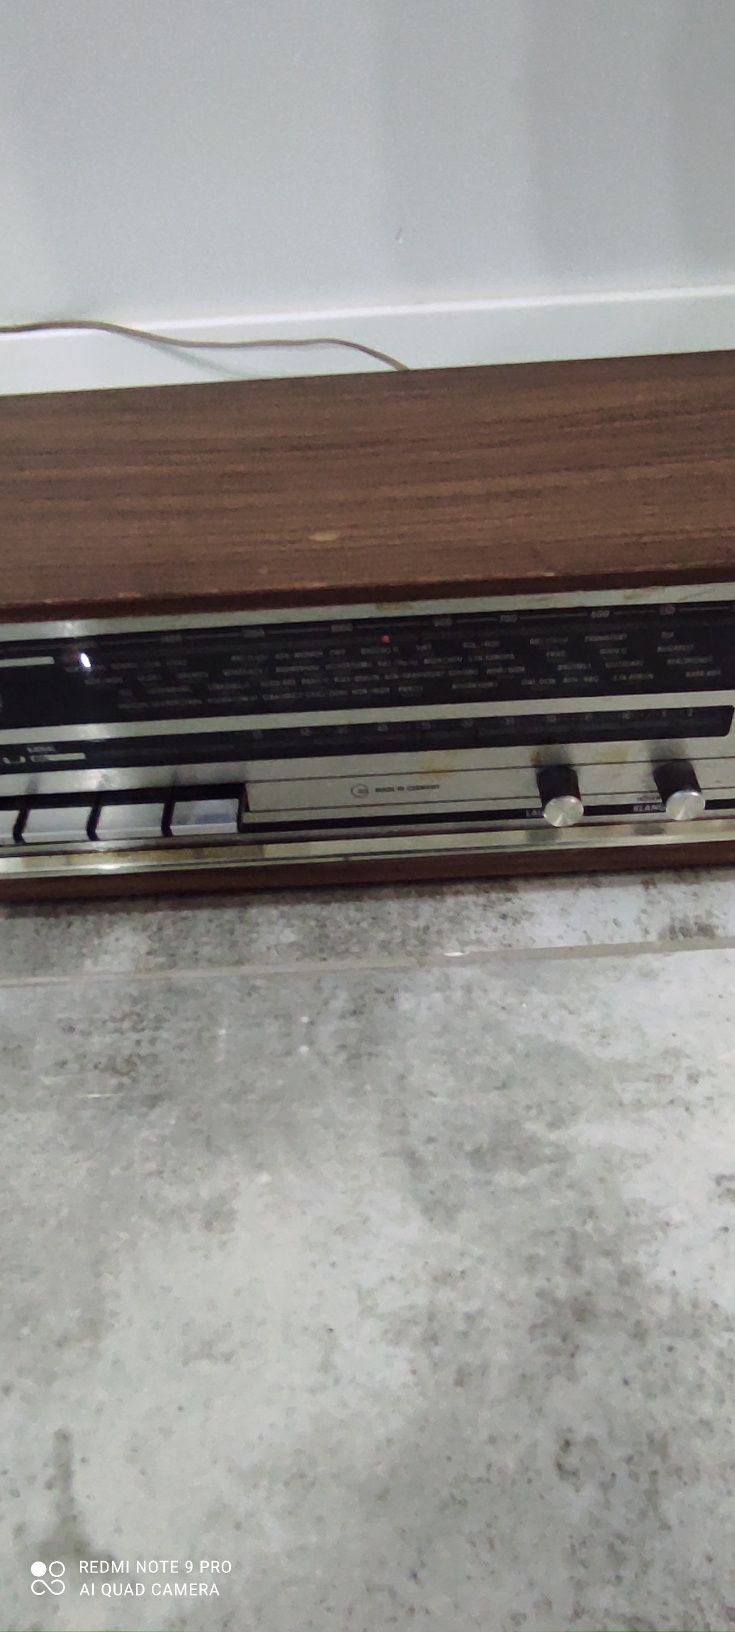 Stare radio stołowe  Grundig RF 95